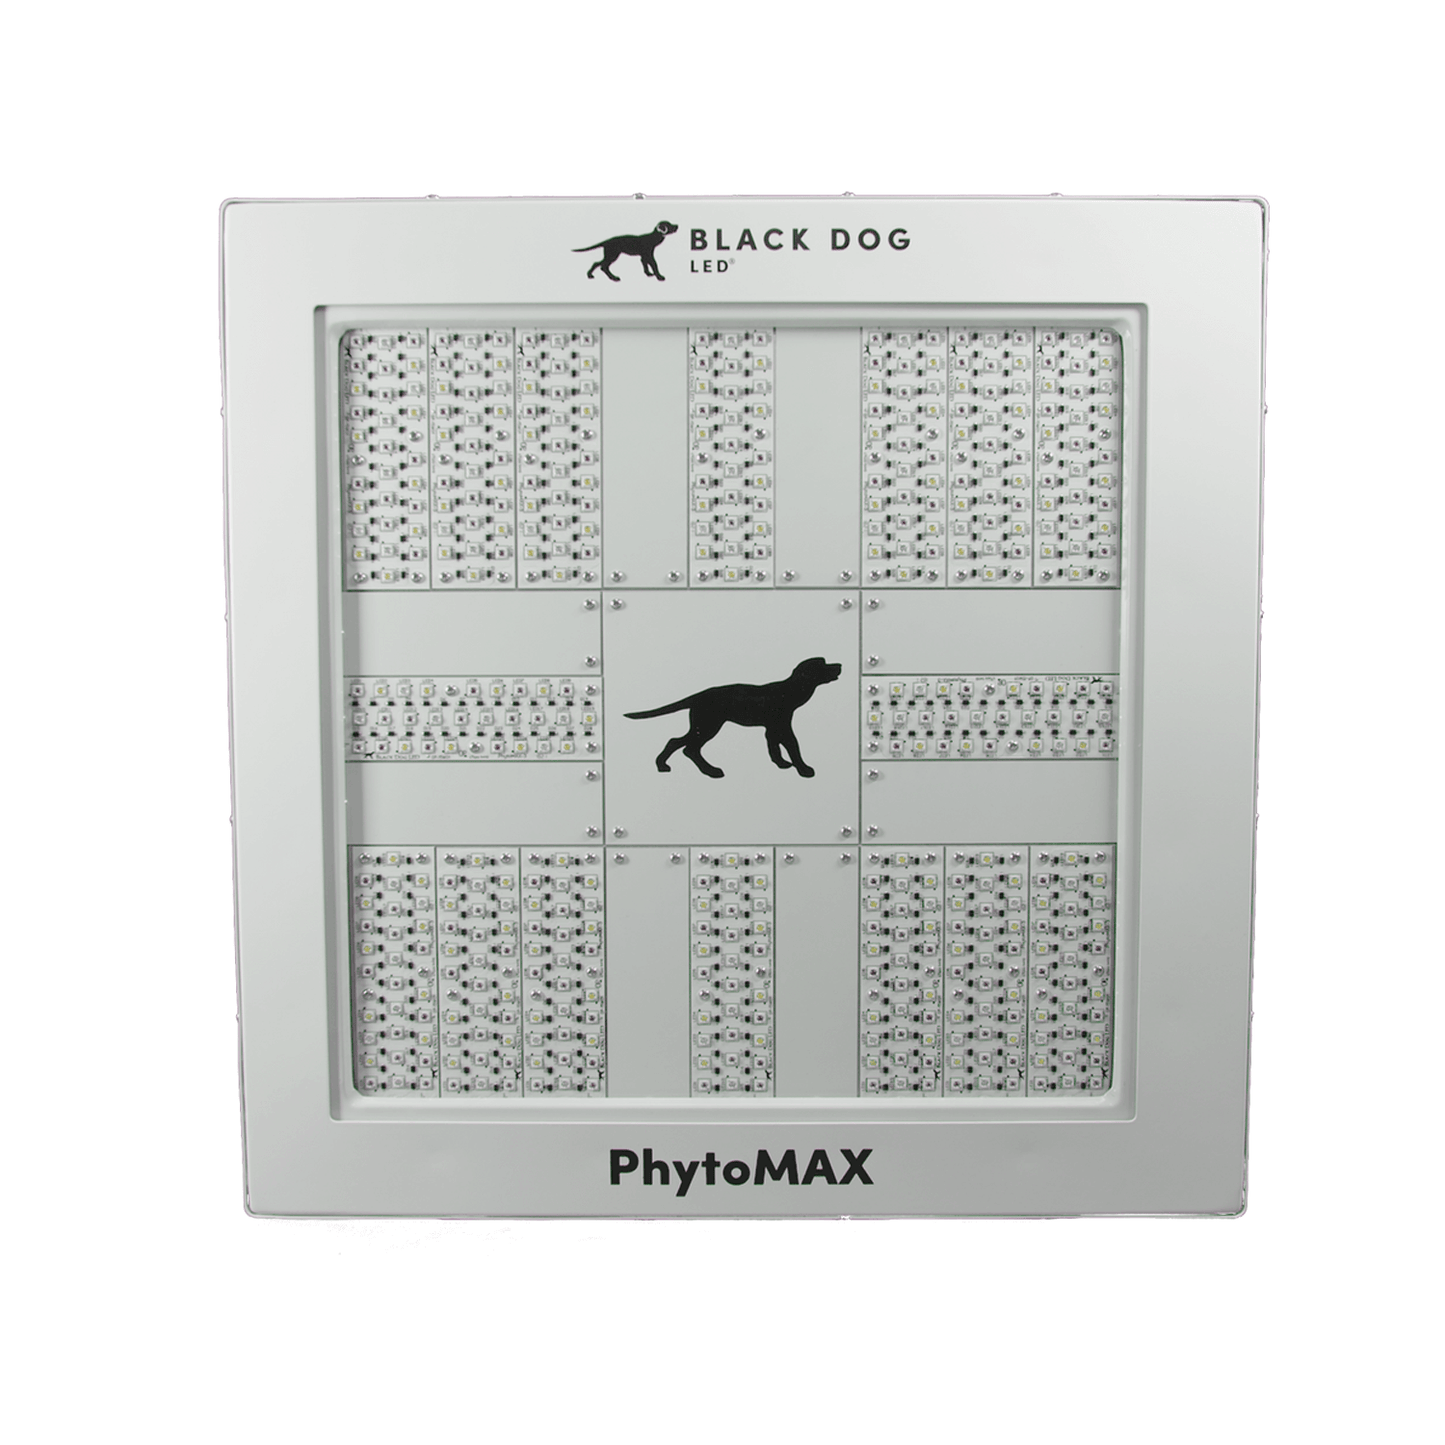 Black Dog LED PhytoMAX-4 16SP 1000W LED Grow Light BD001-0105 Grow Lights 701919639991